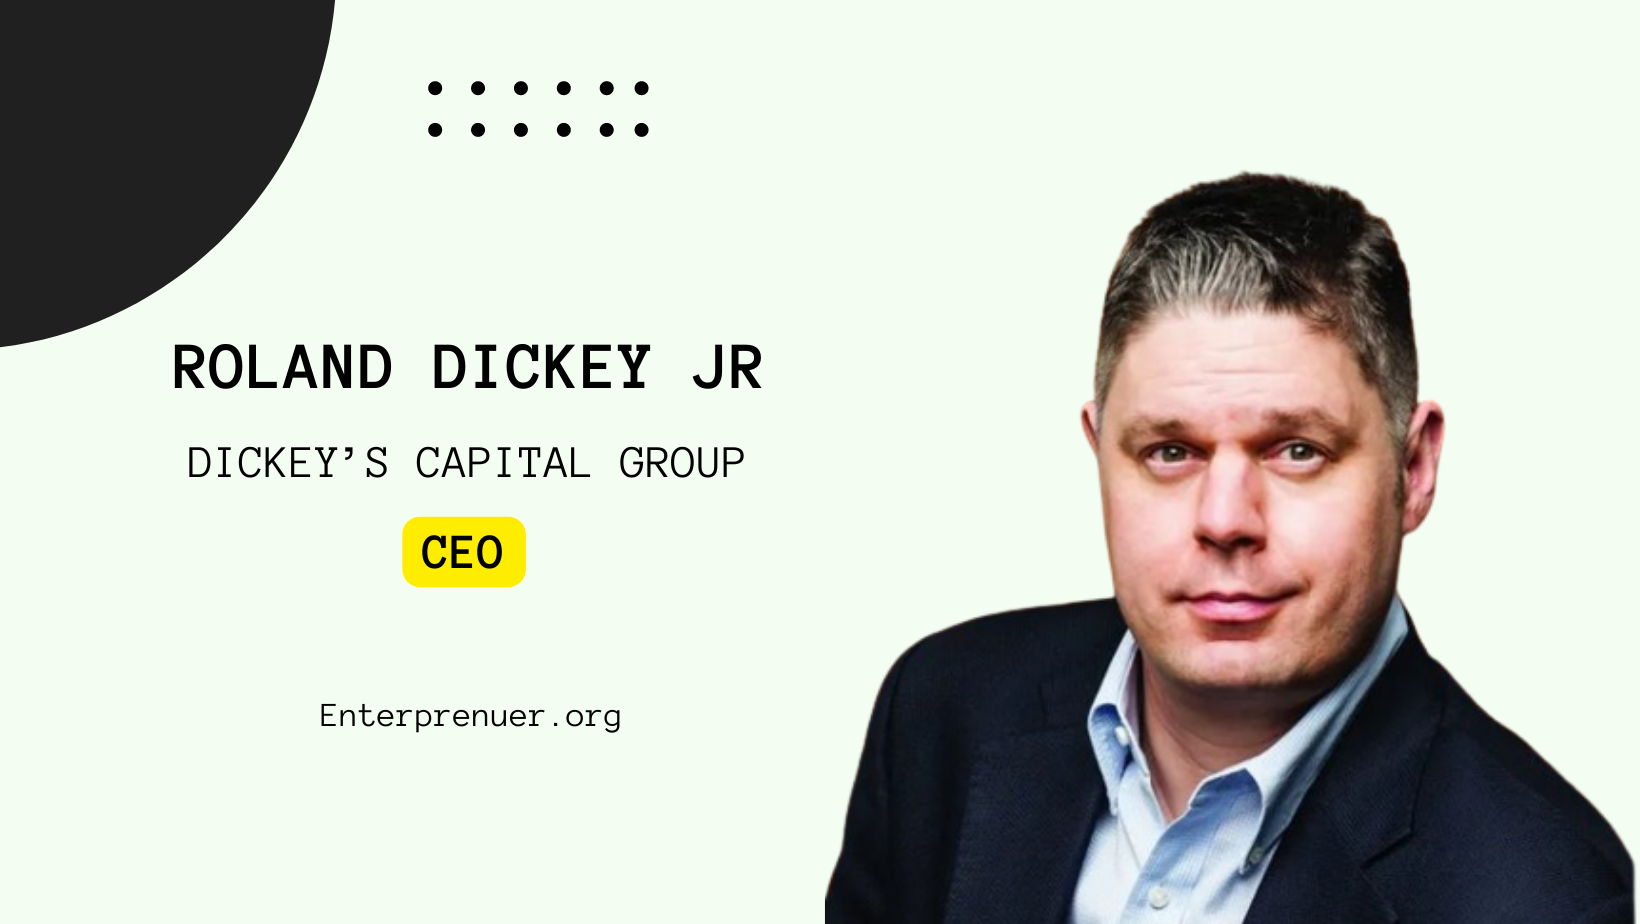 Roland Dickey Jr CEO of Dickey’s Capital Group